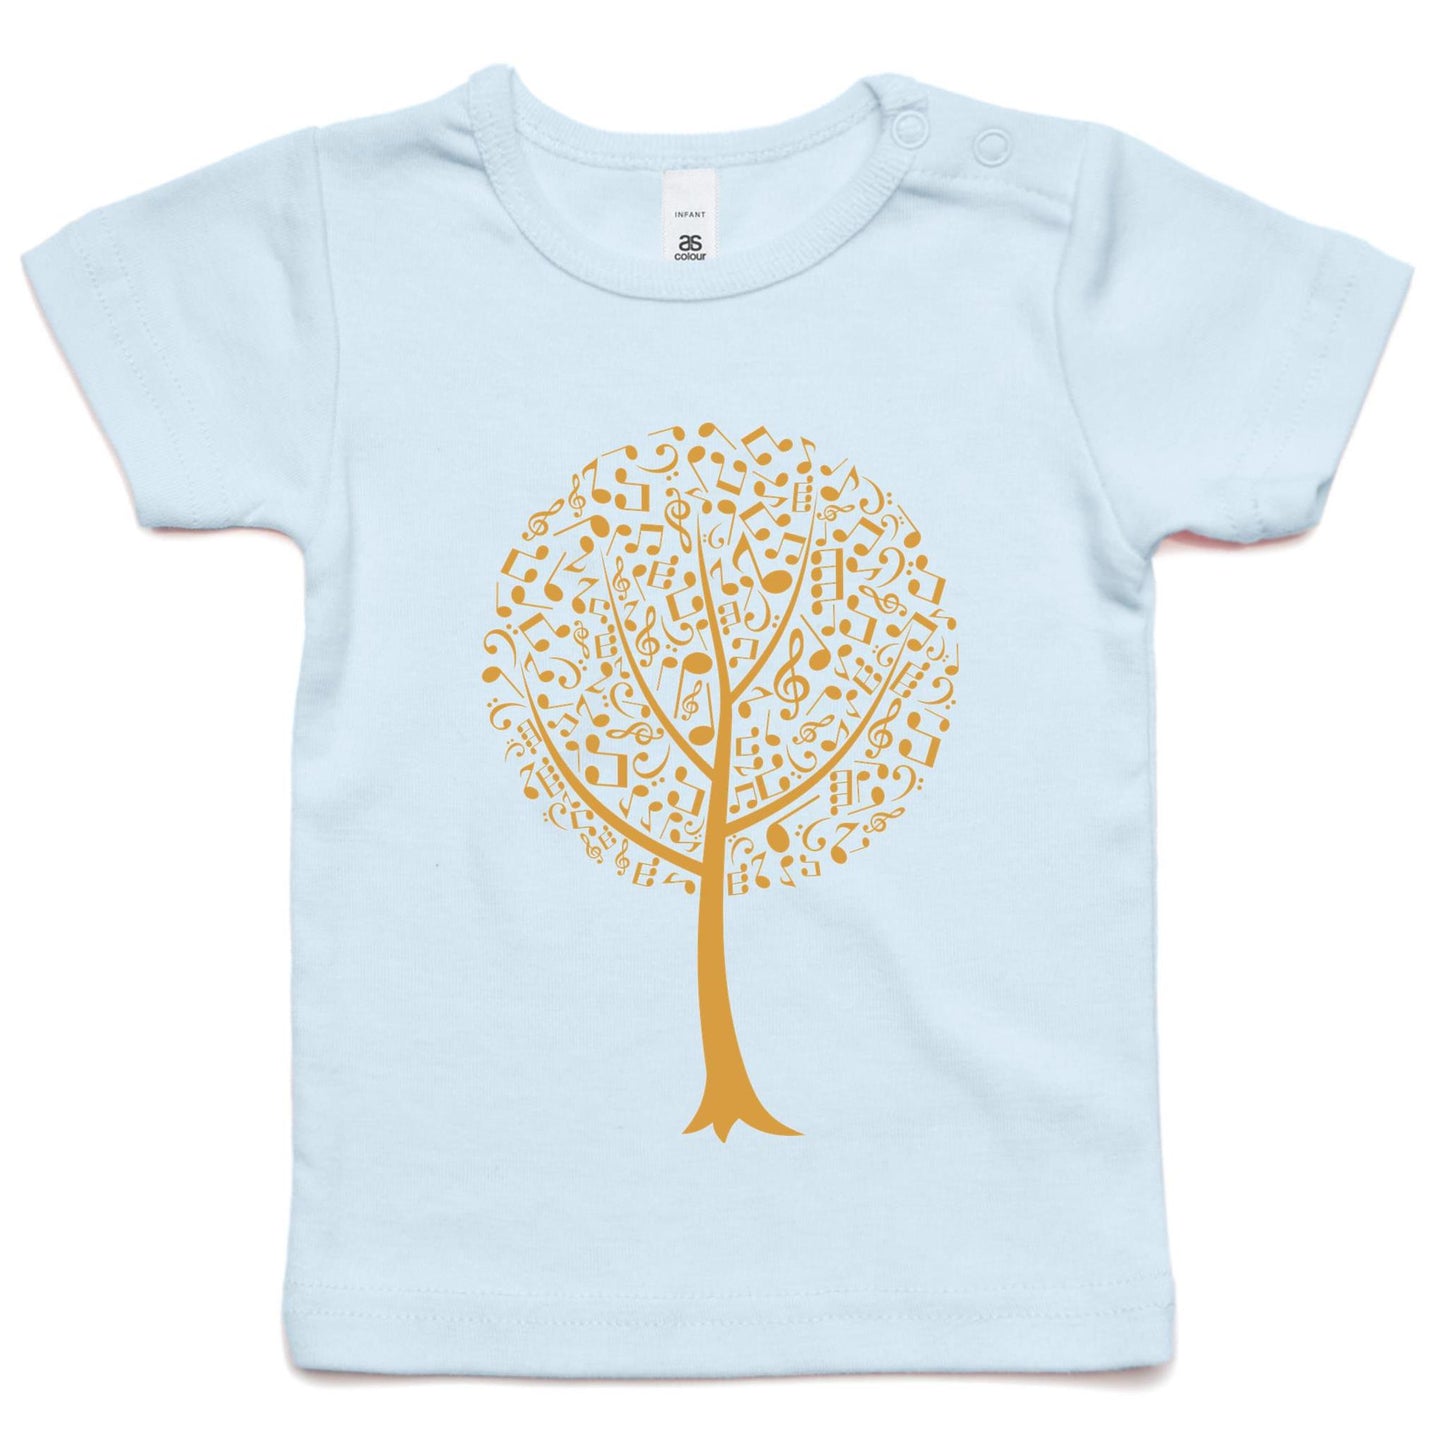 Music Tree - Baby T-shirt Powder Blue Baby T-shirt kids Music Plants